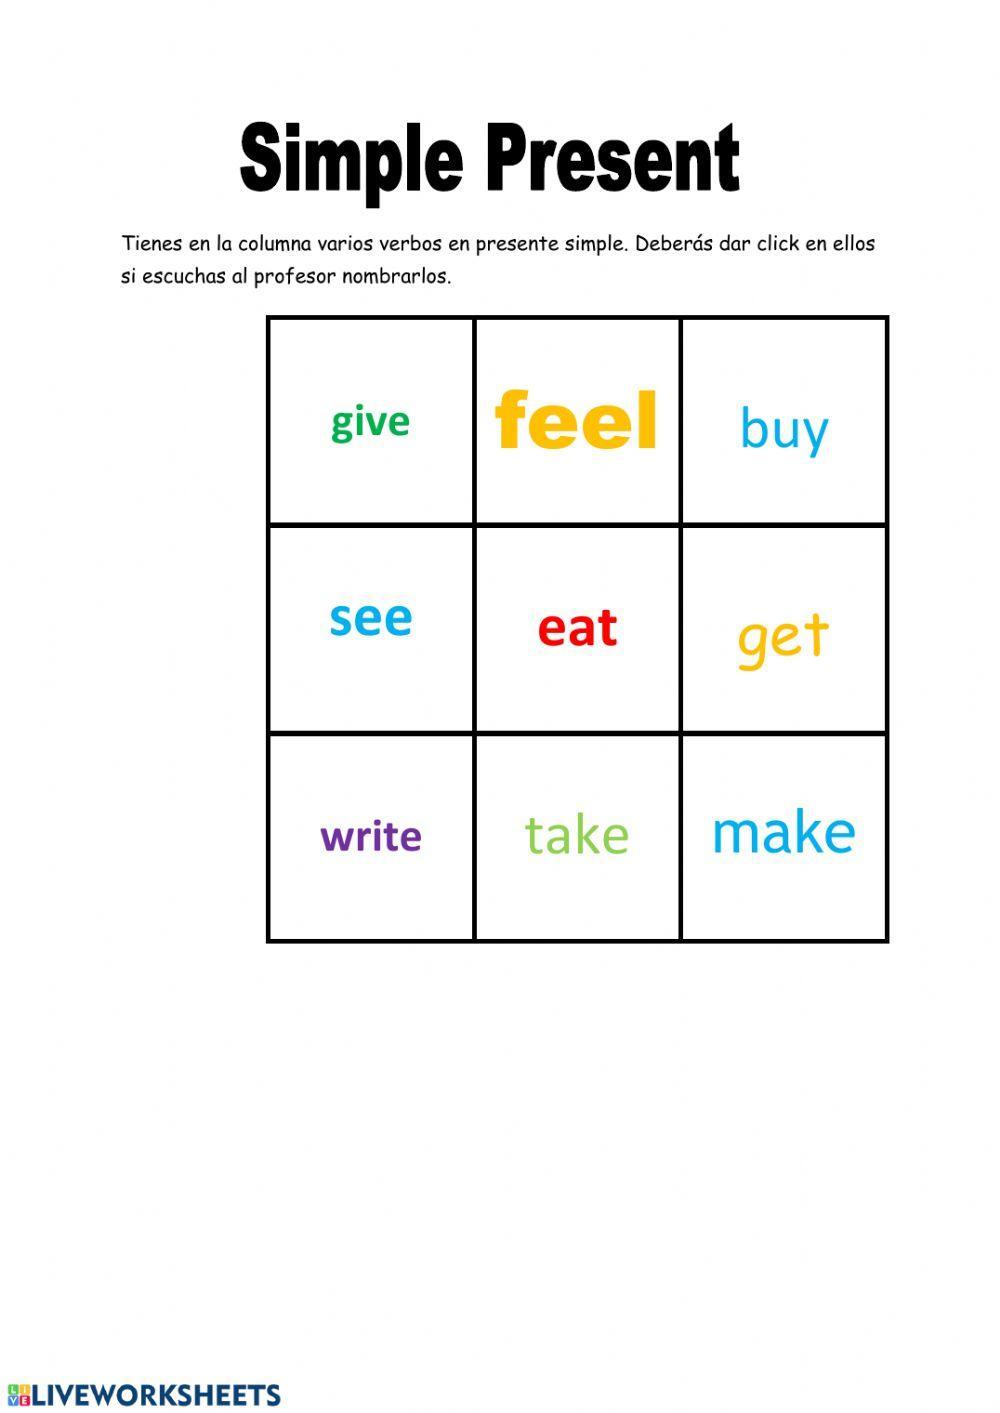 Bingo - Simple Present